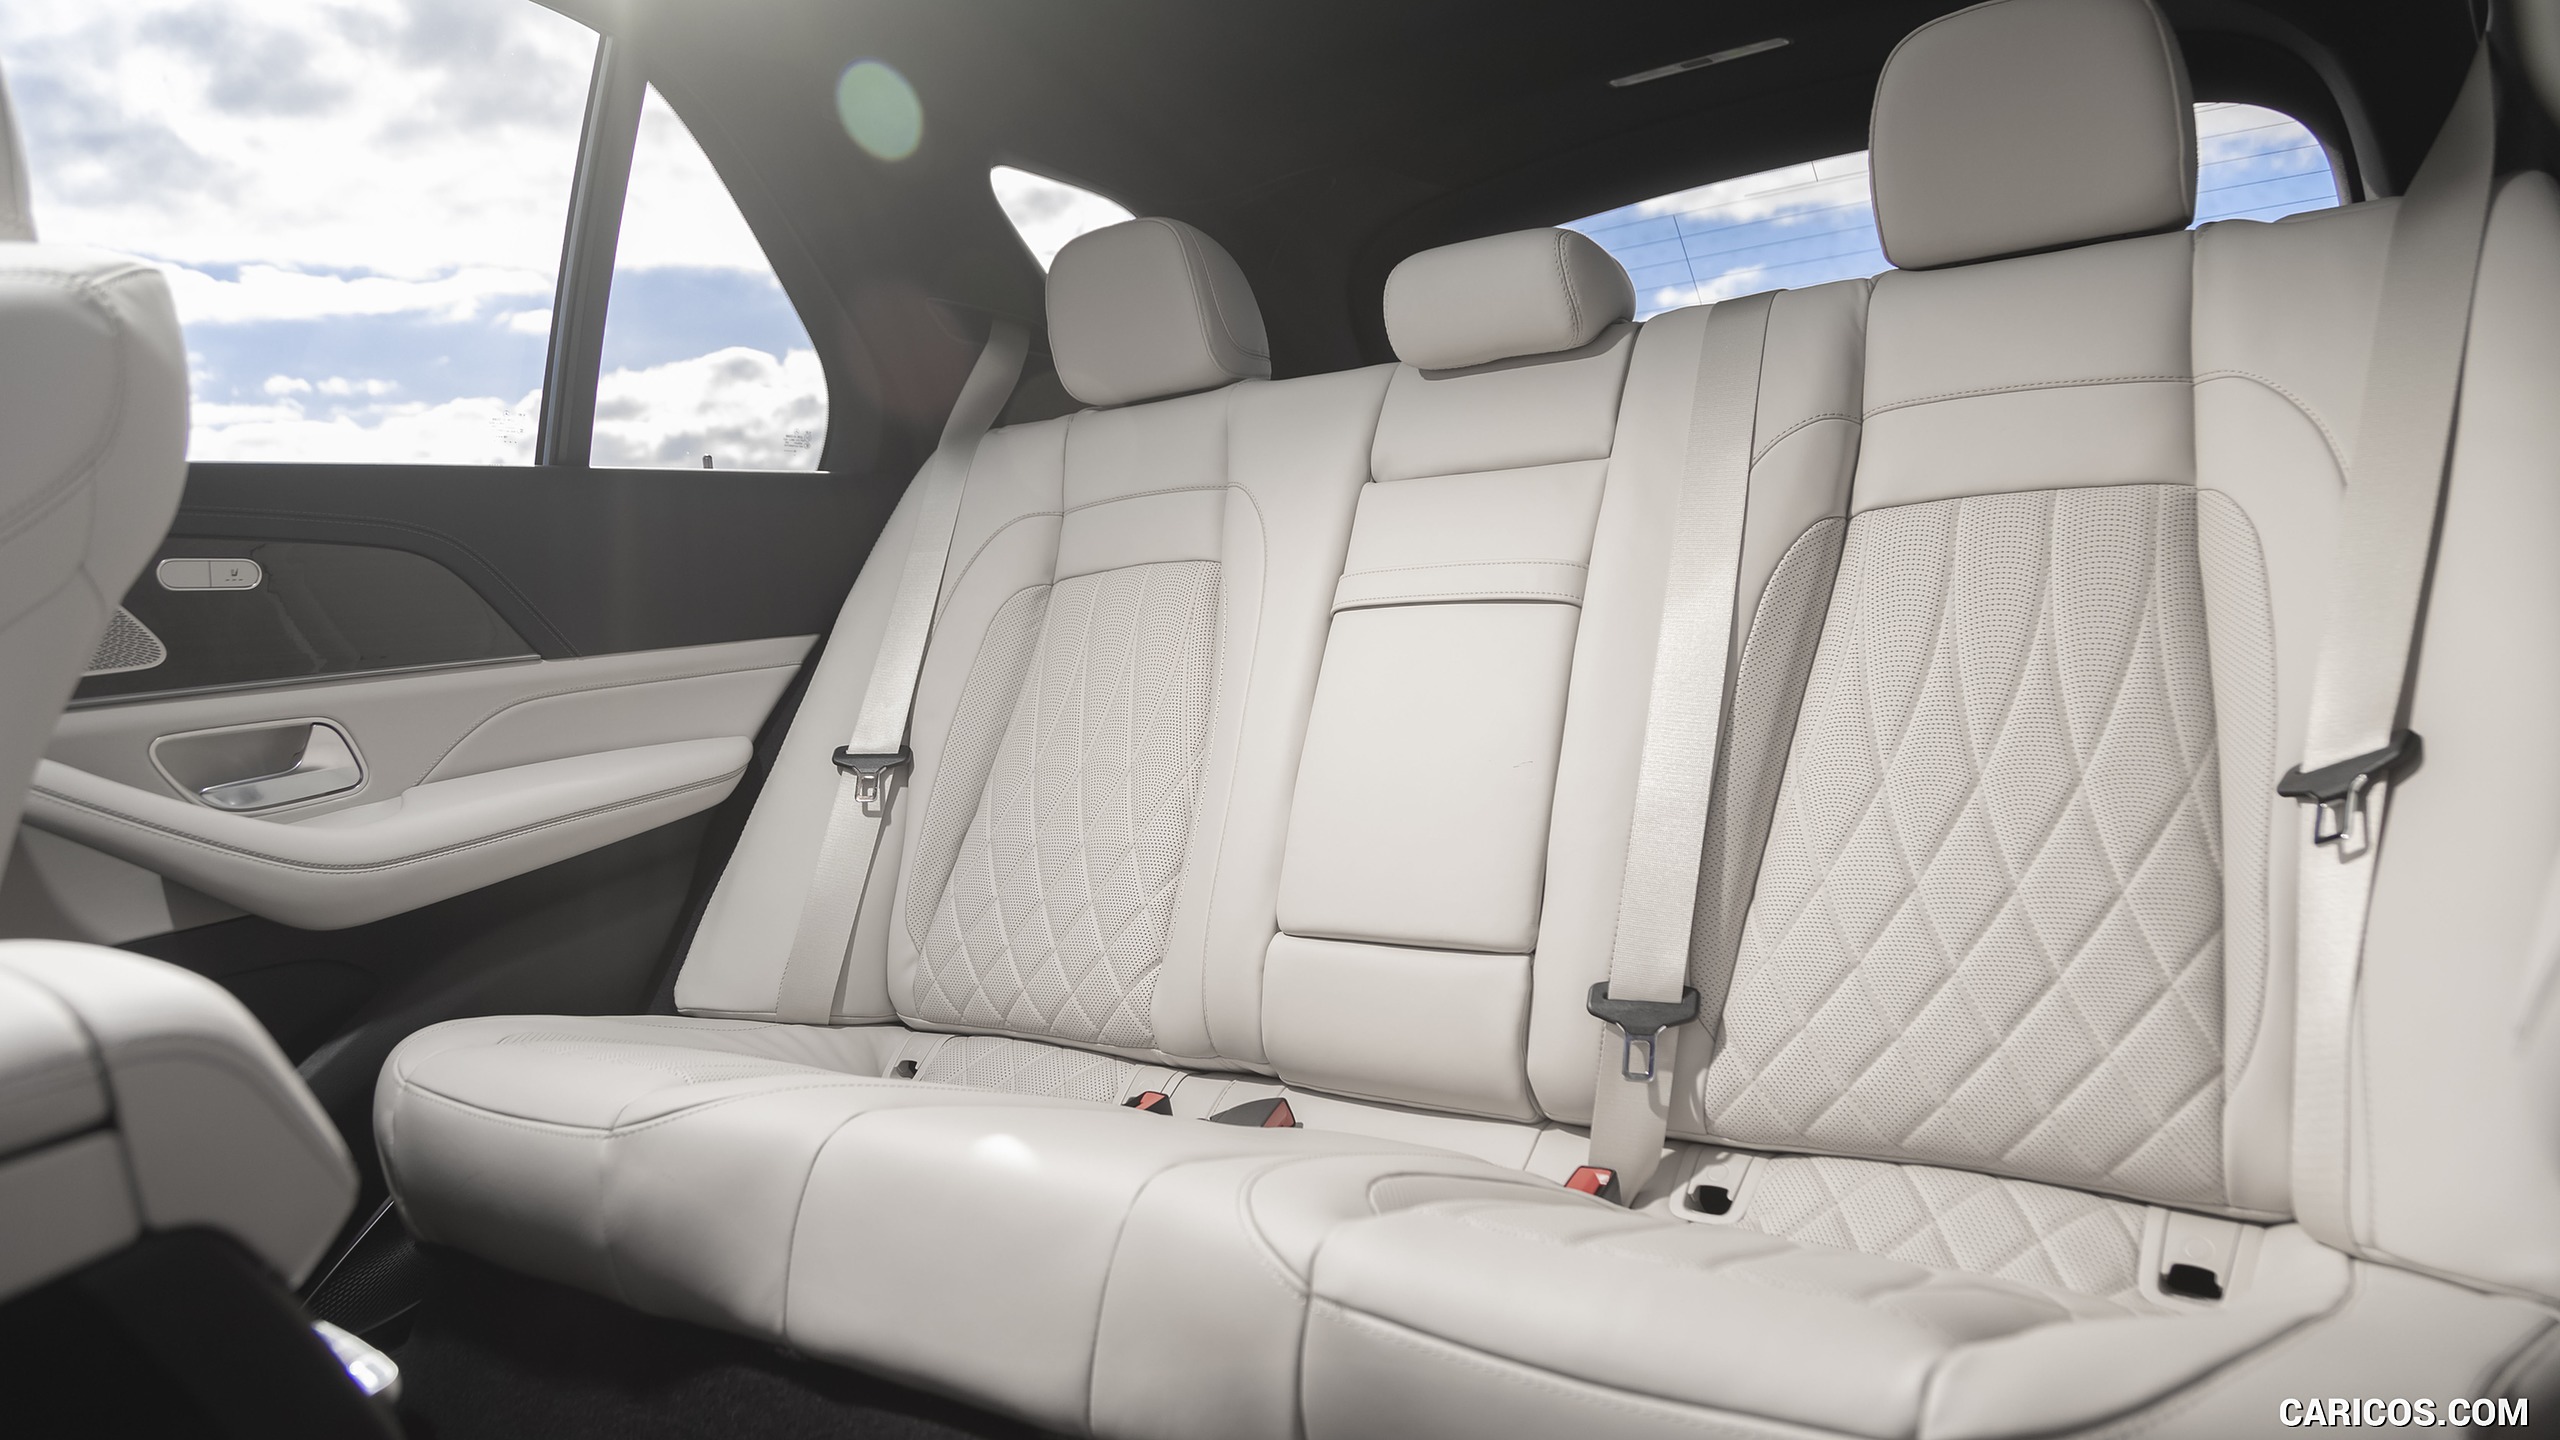 2021 Mercedes-AMG GLE 63 S (US-Spec) - Interior, Rear Seats, #90 of 187